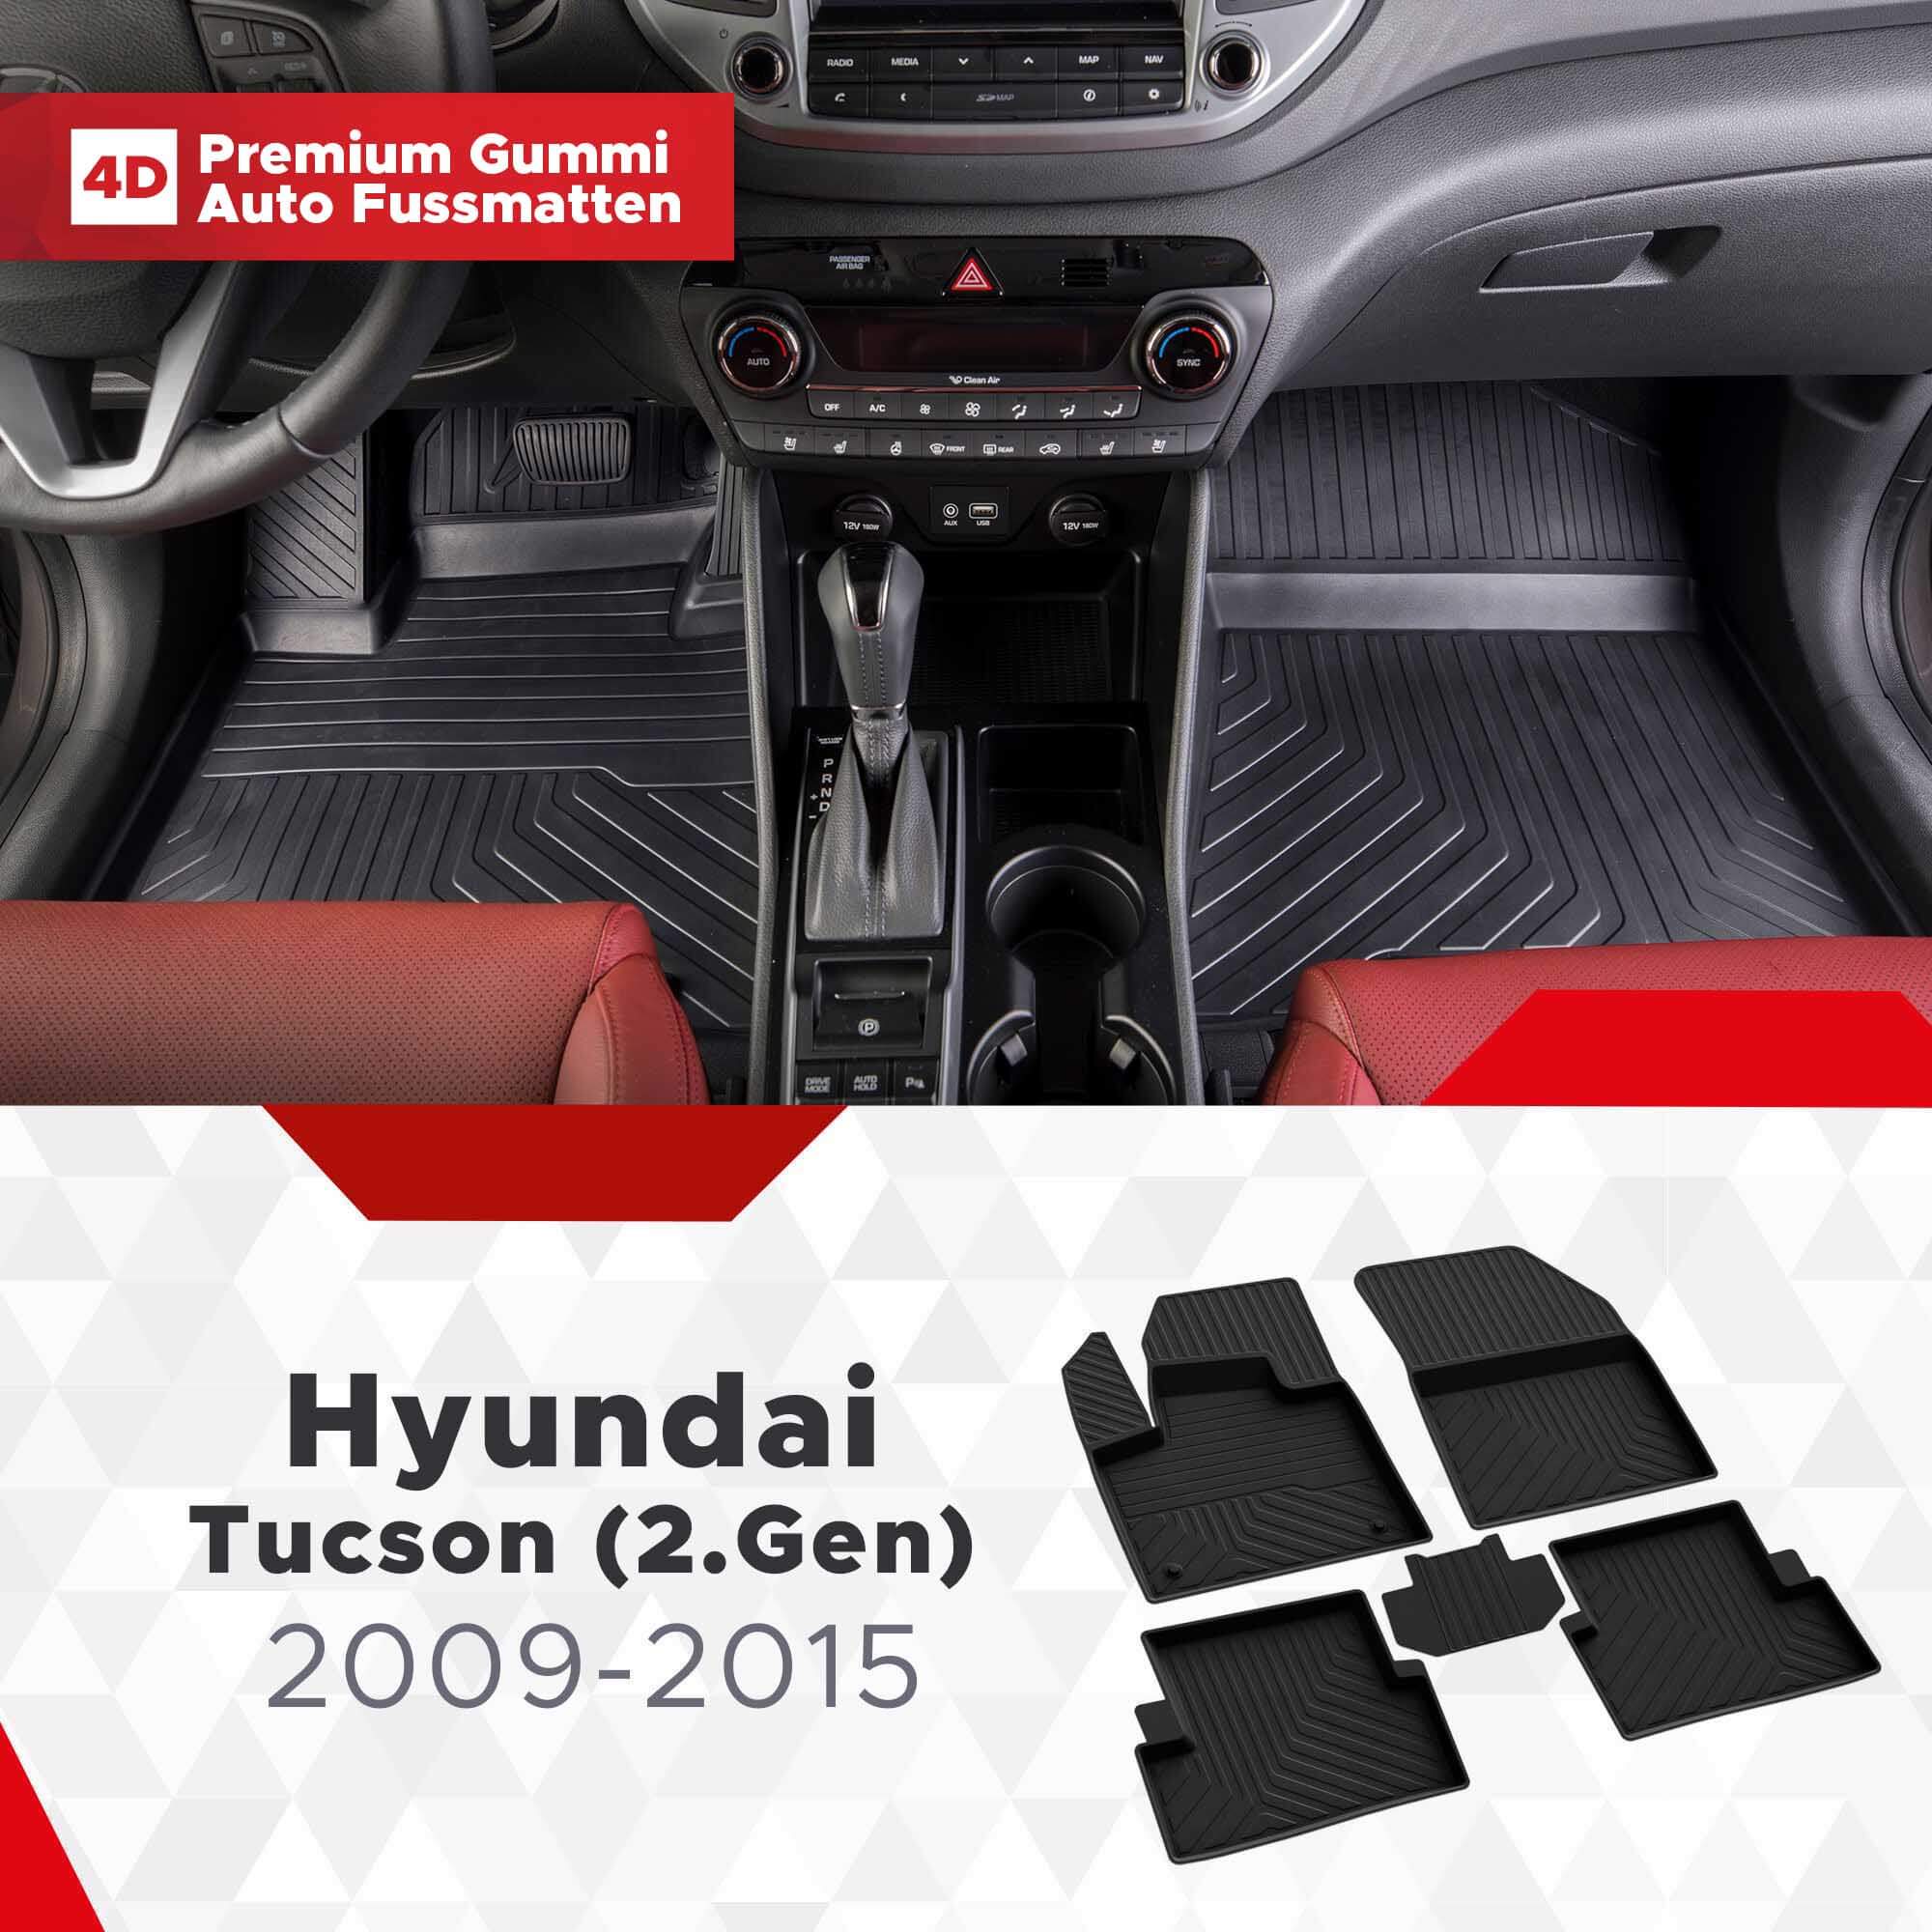 4D Hyundai Tucson (2.Gen) Fussmatten Bj 2009-2015 Gummimatten